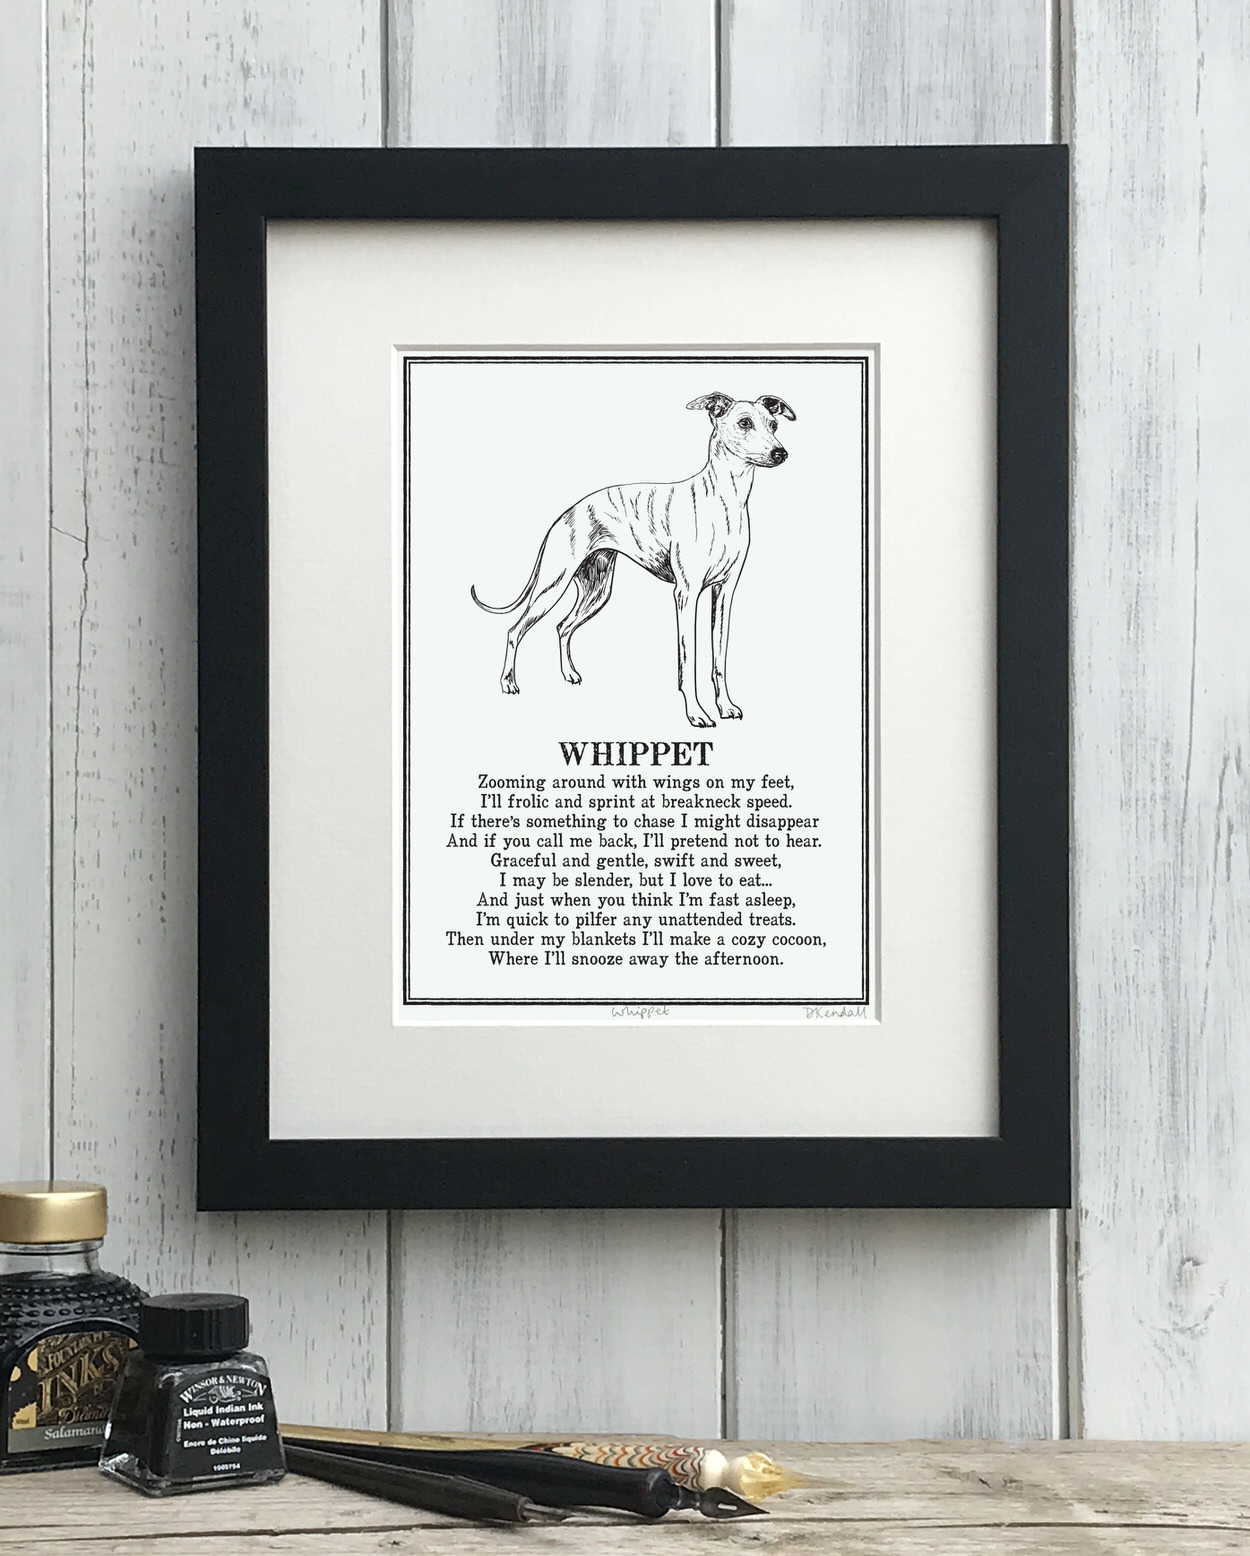 Whippet Illustrated Poem Print | The Enlightened Hound